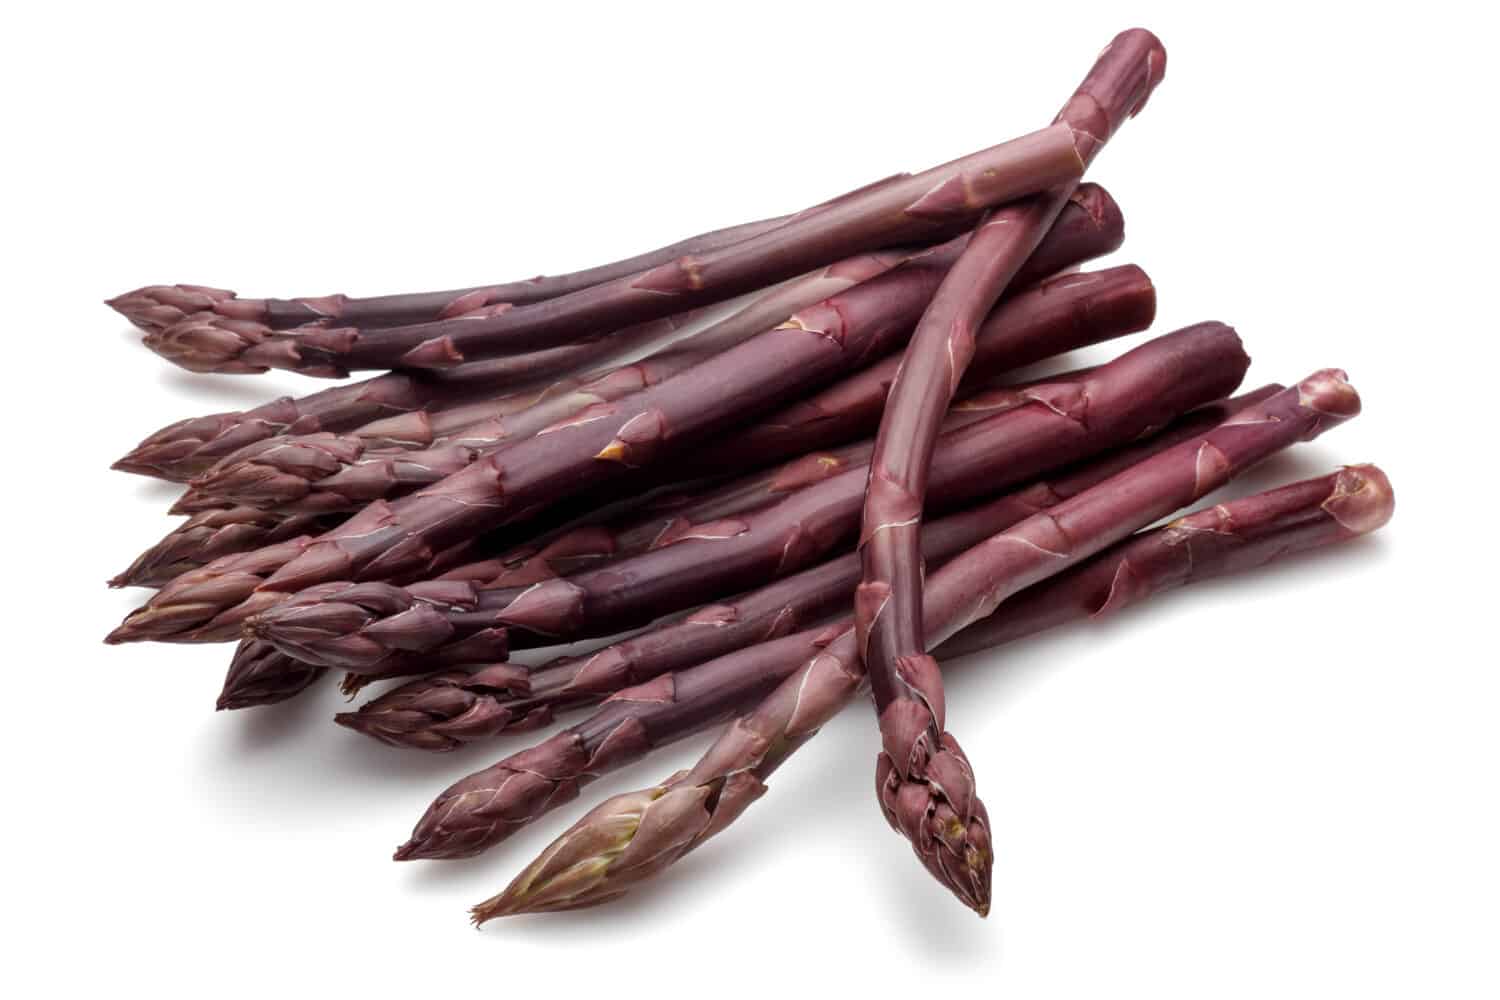 Purple asparagus sticks isolated on white background